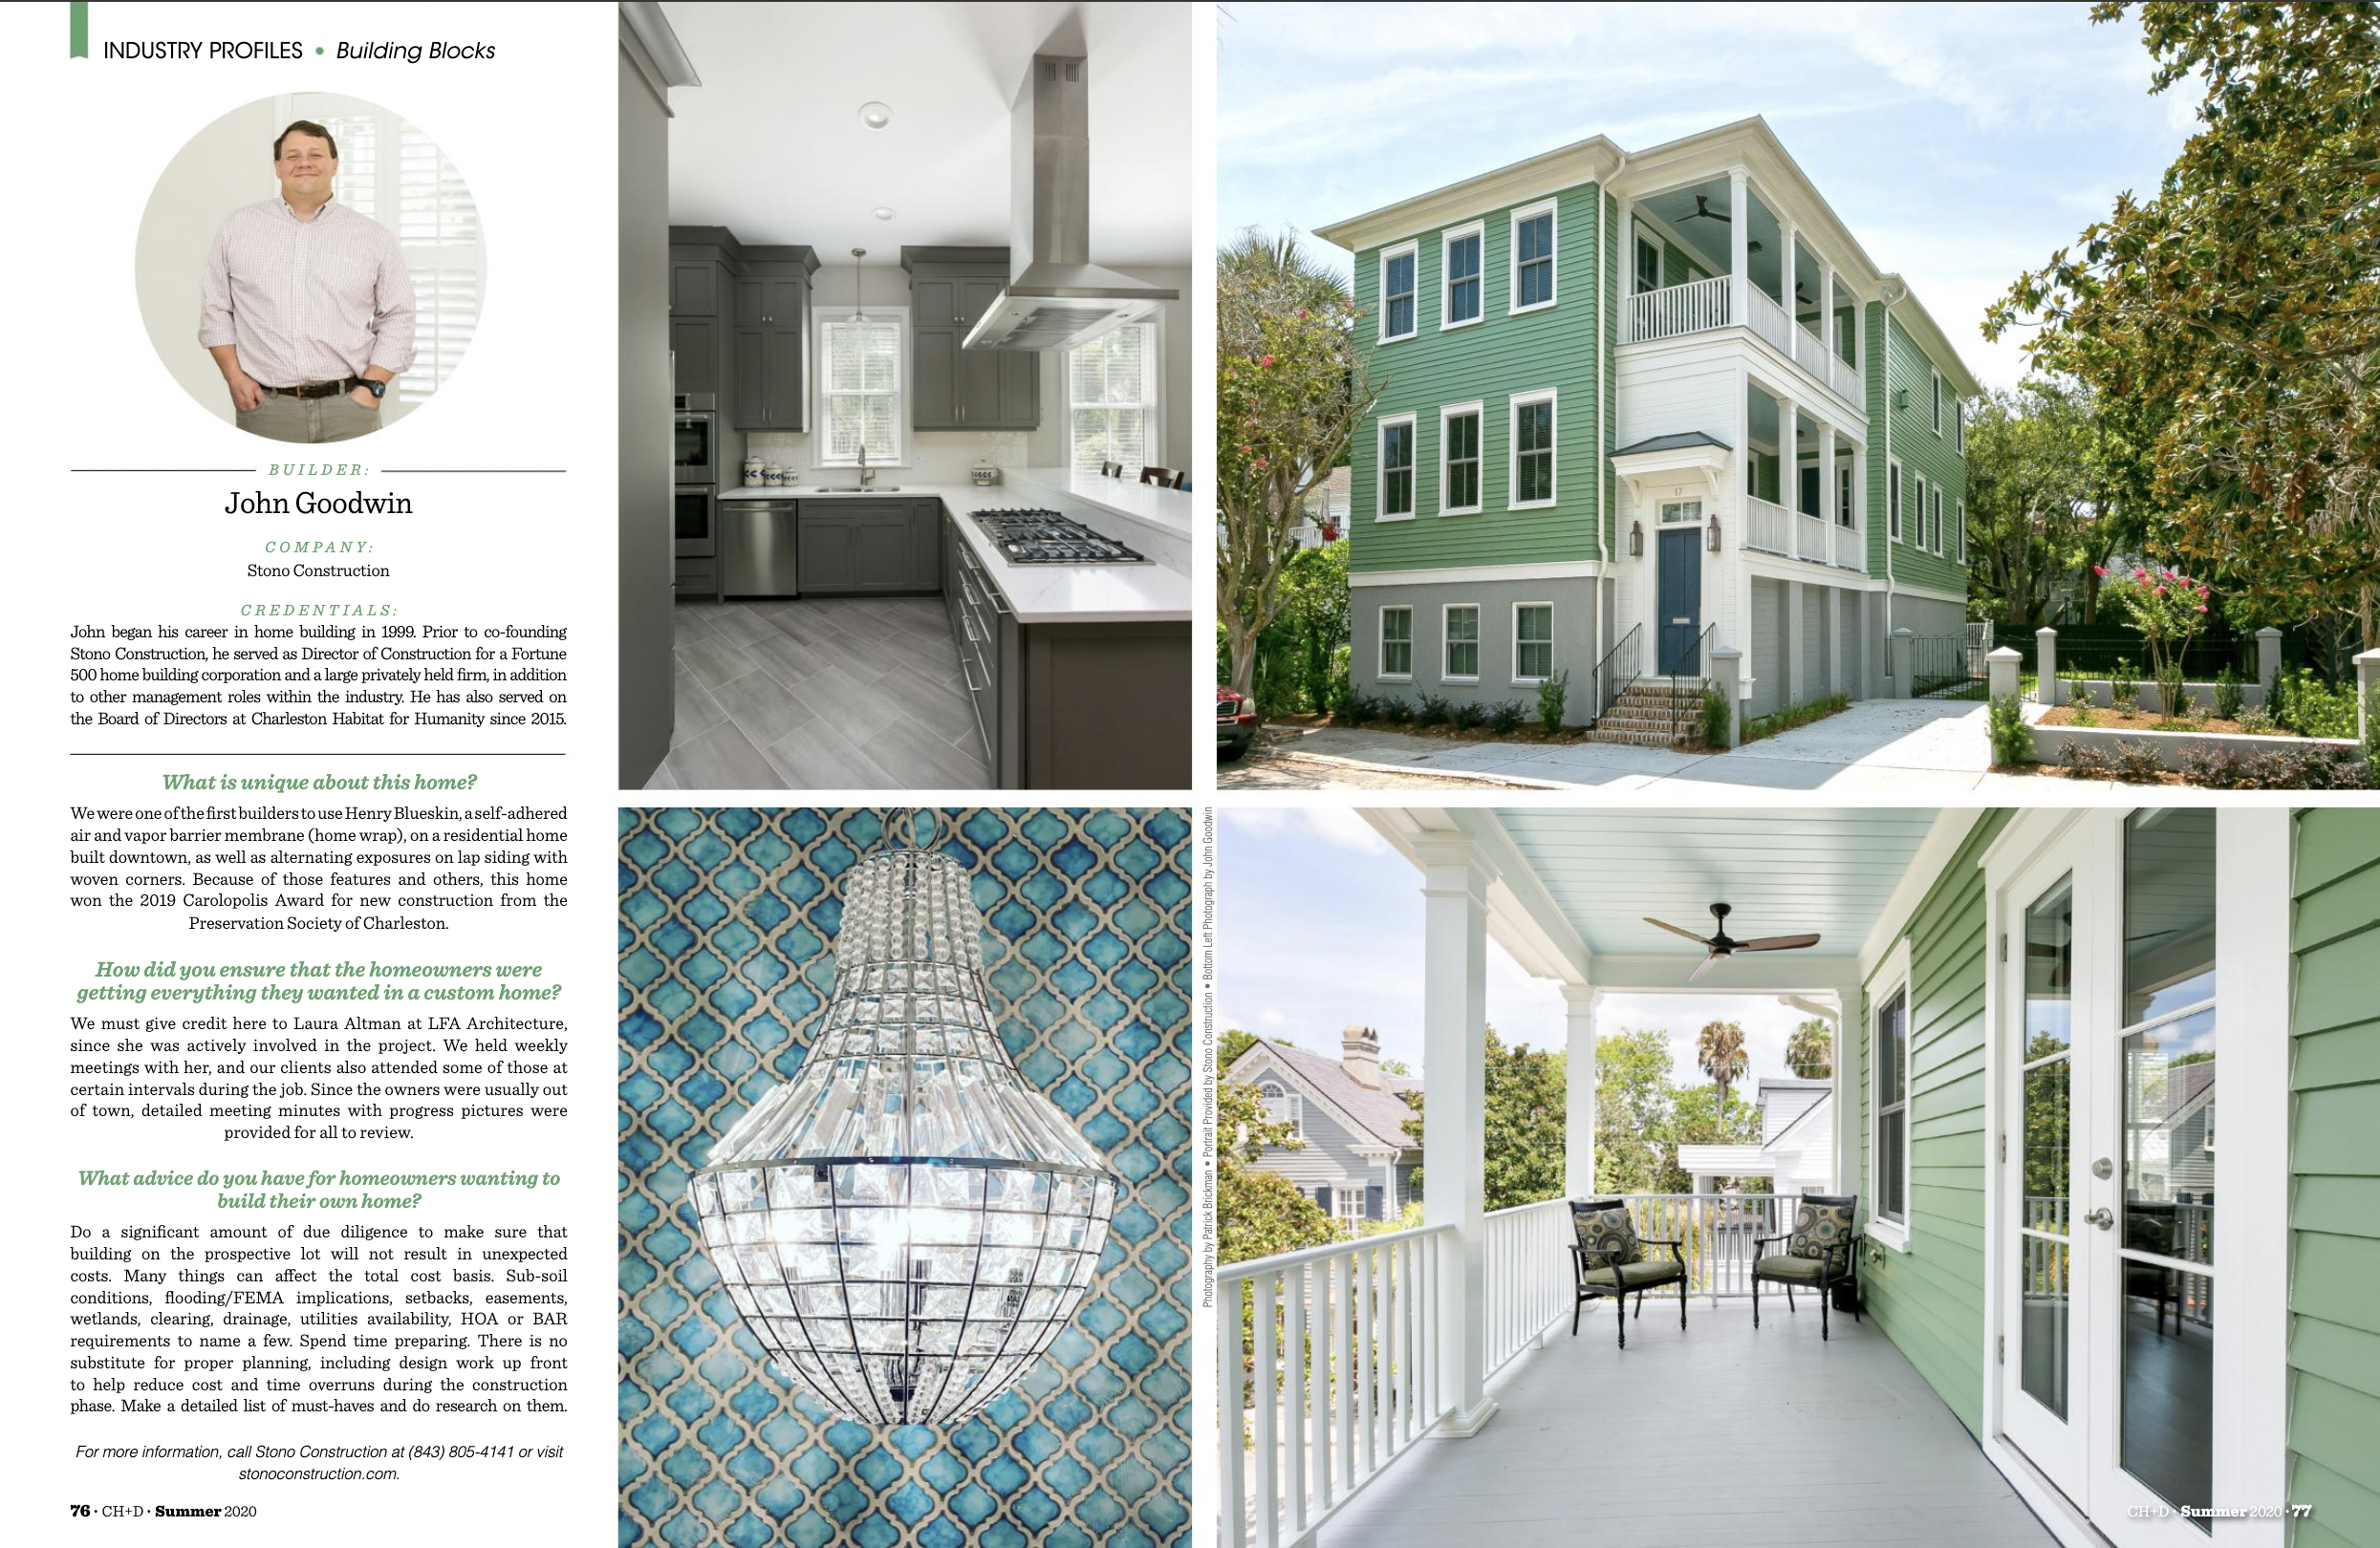 Charleston Home and Design article clipping featuring Stono Construction Principal, John Goodwin. 